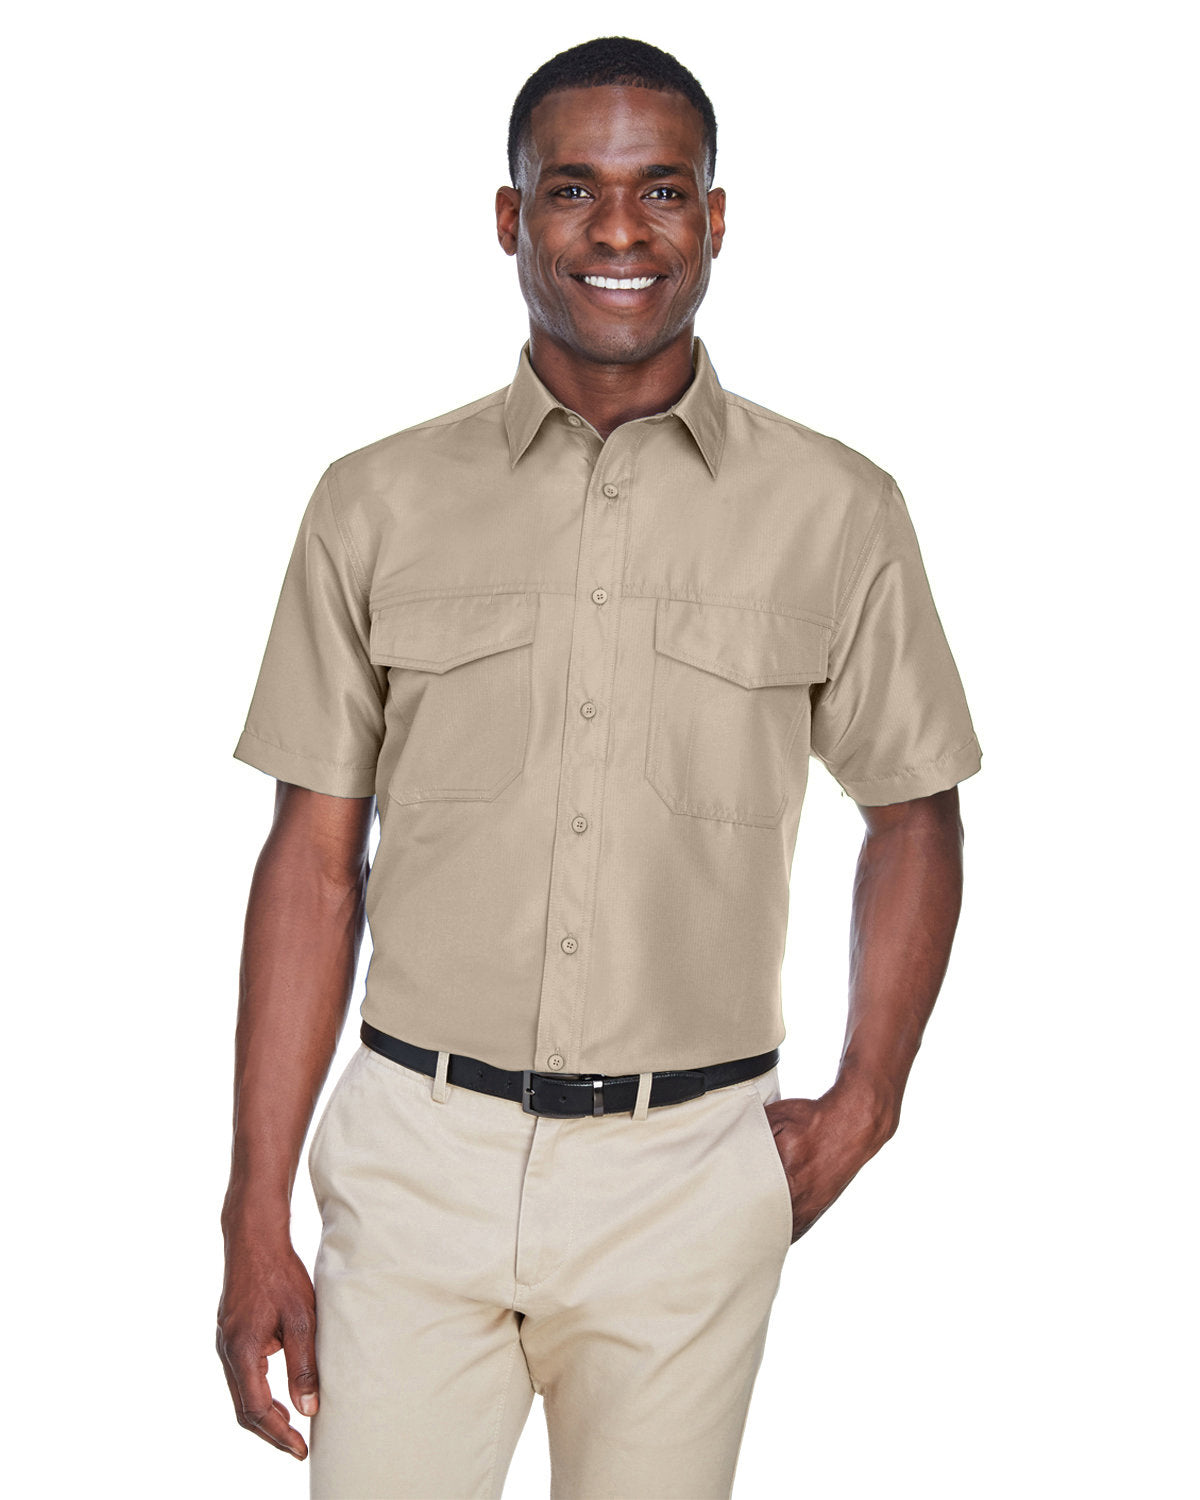 B5) M580 Harriton Men's Key West Short-Sleeve Performance Staff Shirt - OIL QUICK